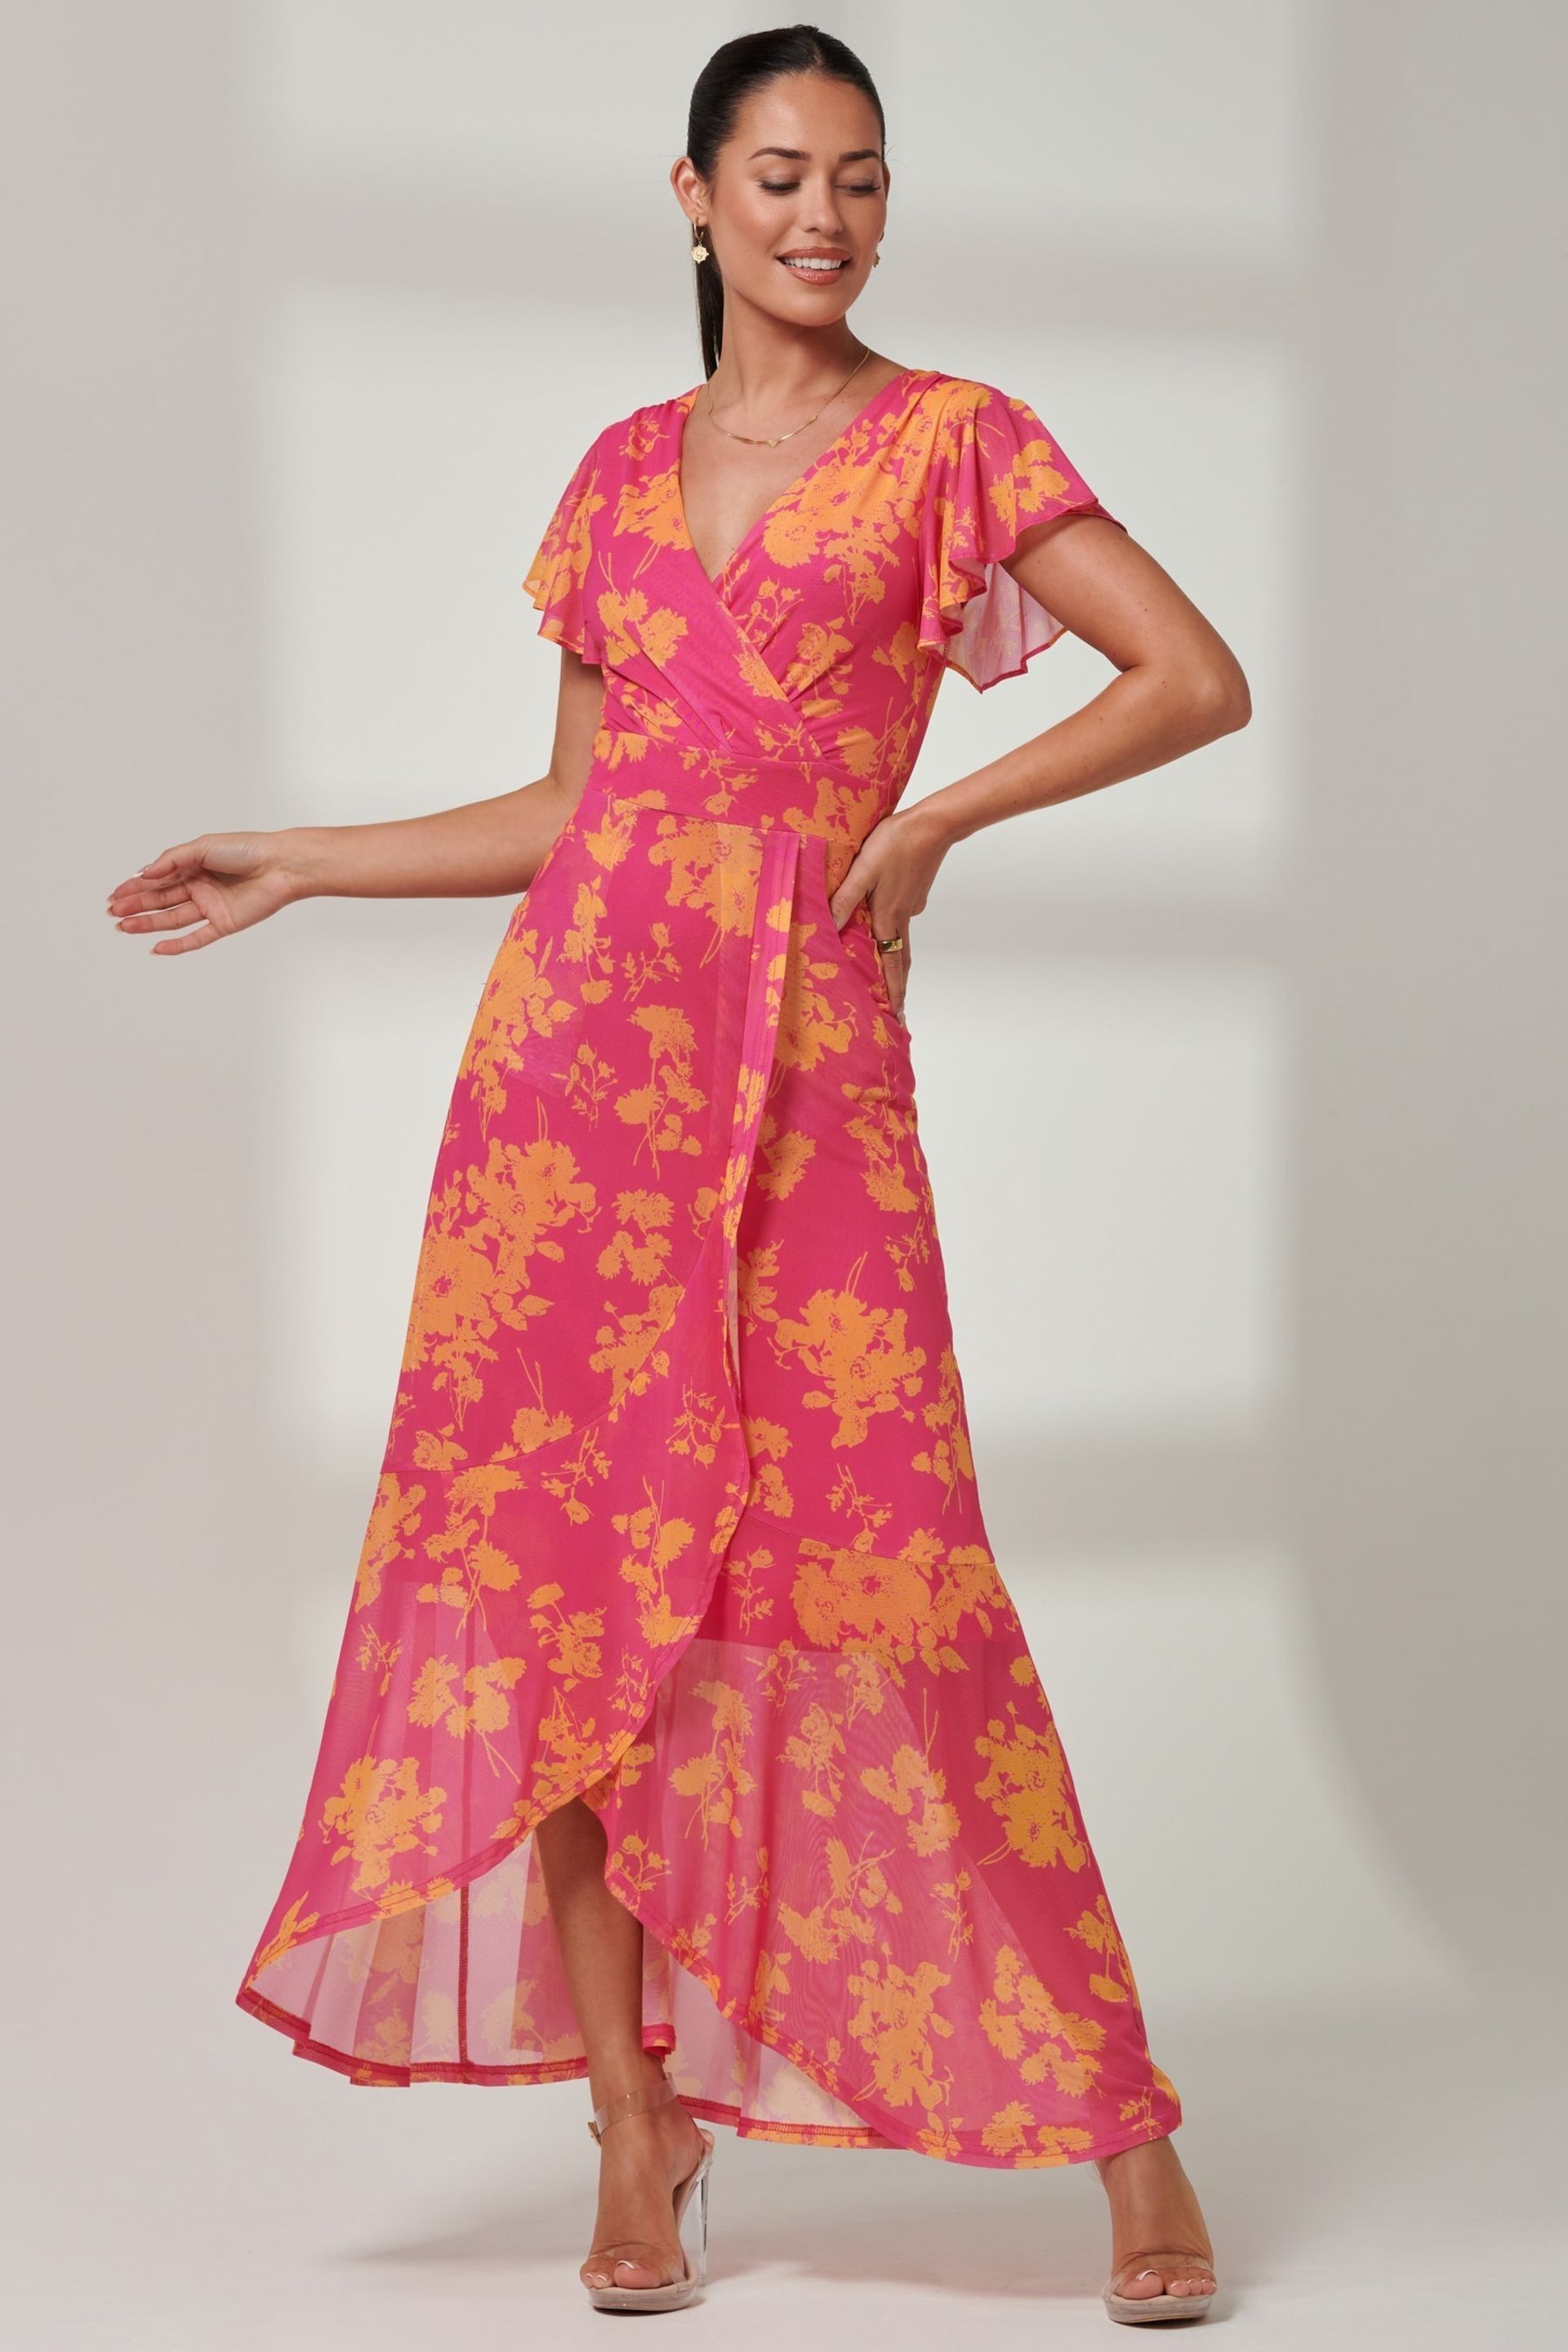 Jolie Moi Pink Floral Gisselle Ruffle Hem Mesh Maxi Dress - Image 1 of 6